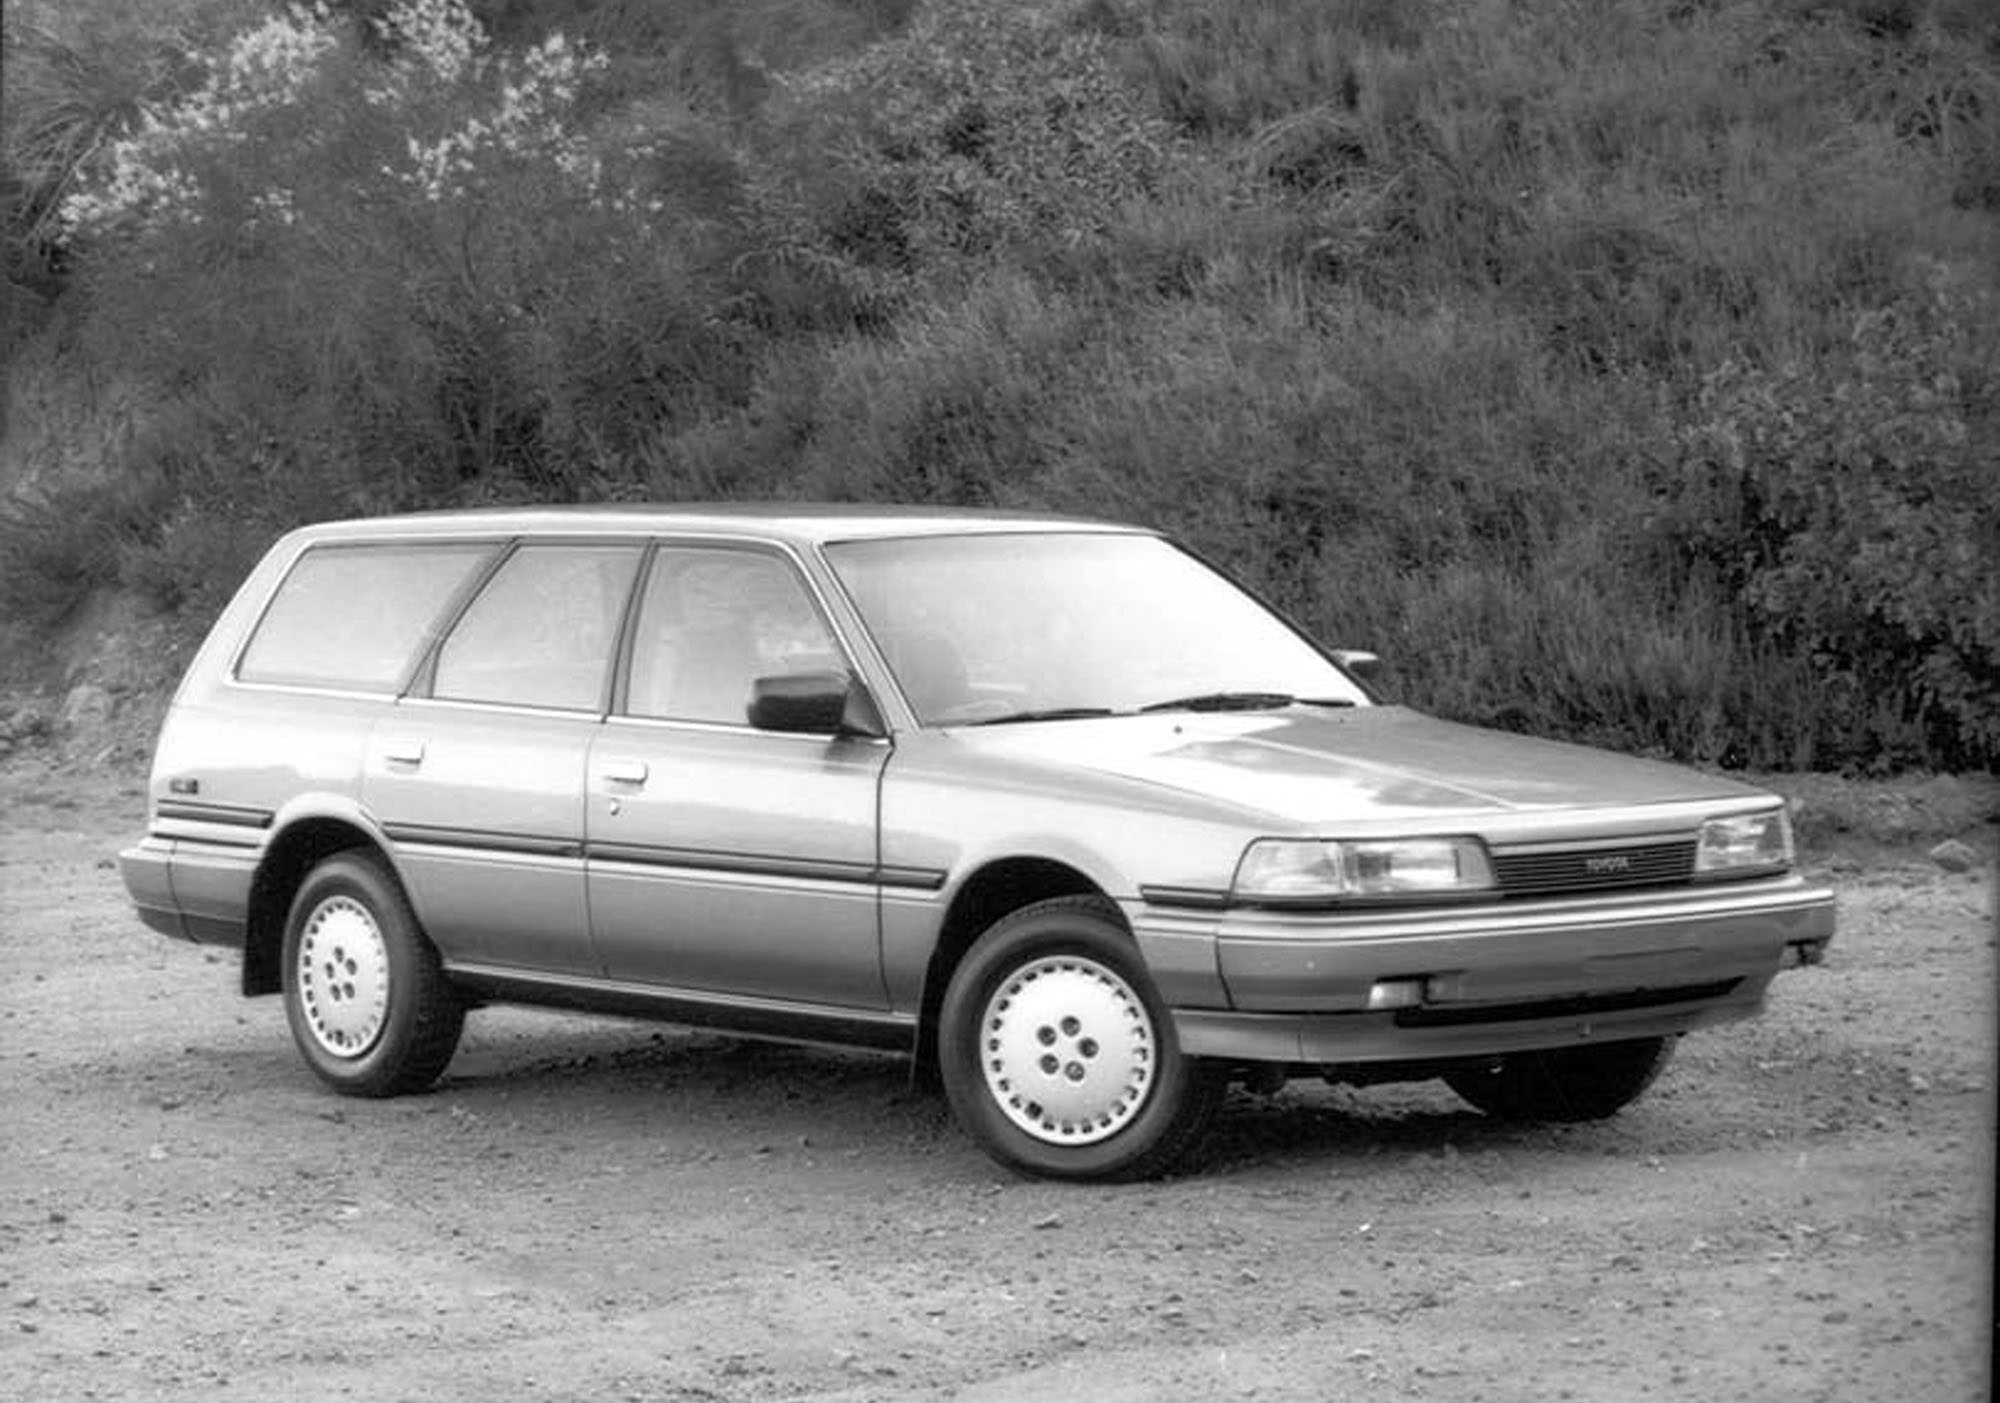 1980s Toyota Camry station wagon.